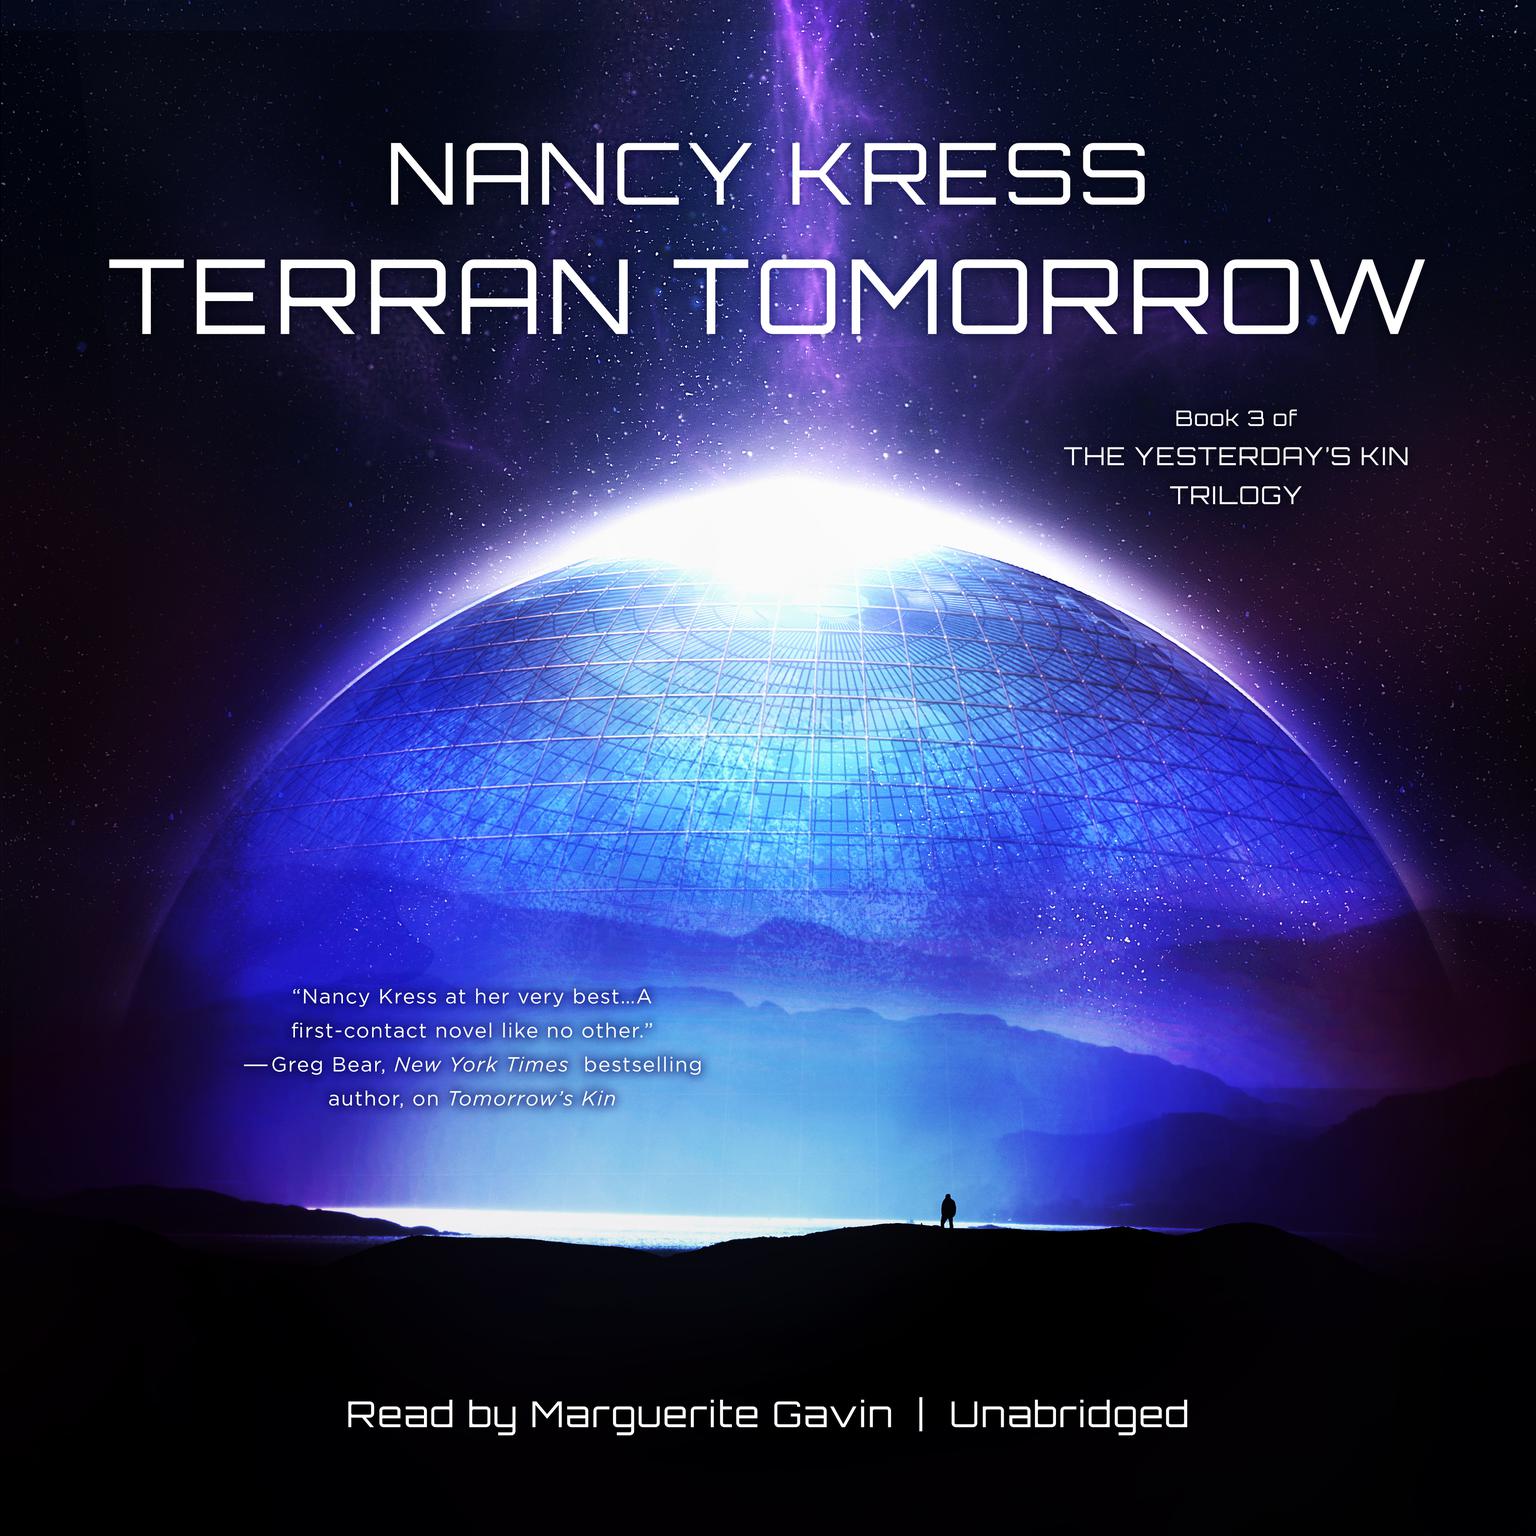 Terran Tomorrow: Book 3 of the Yesterday’s Kin Trilogy Audiobook, by Nancy Kress